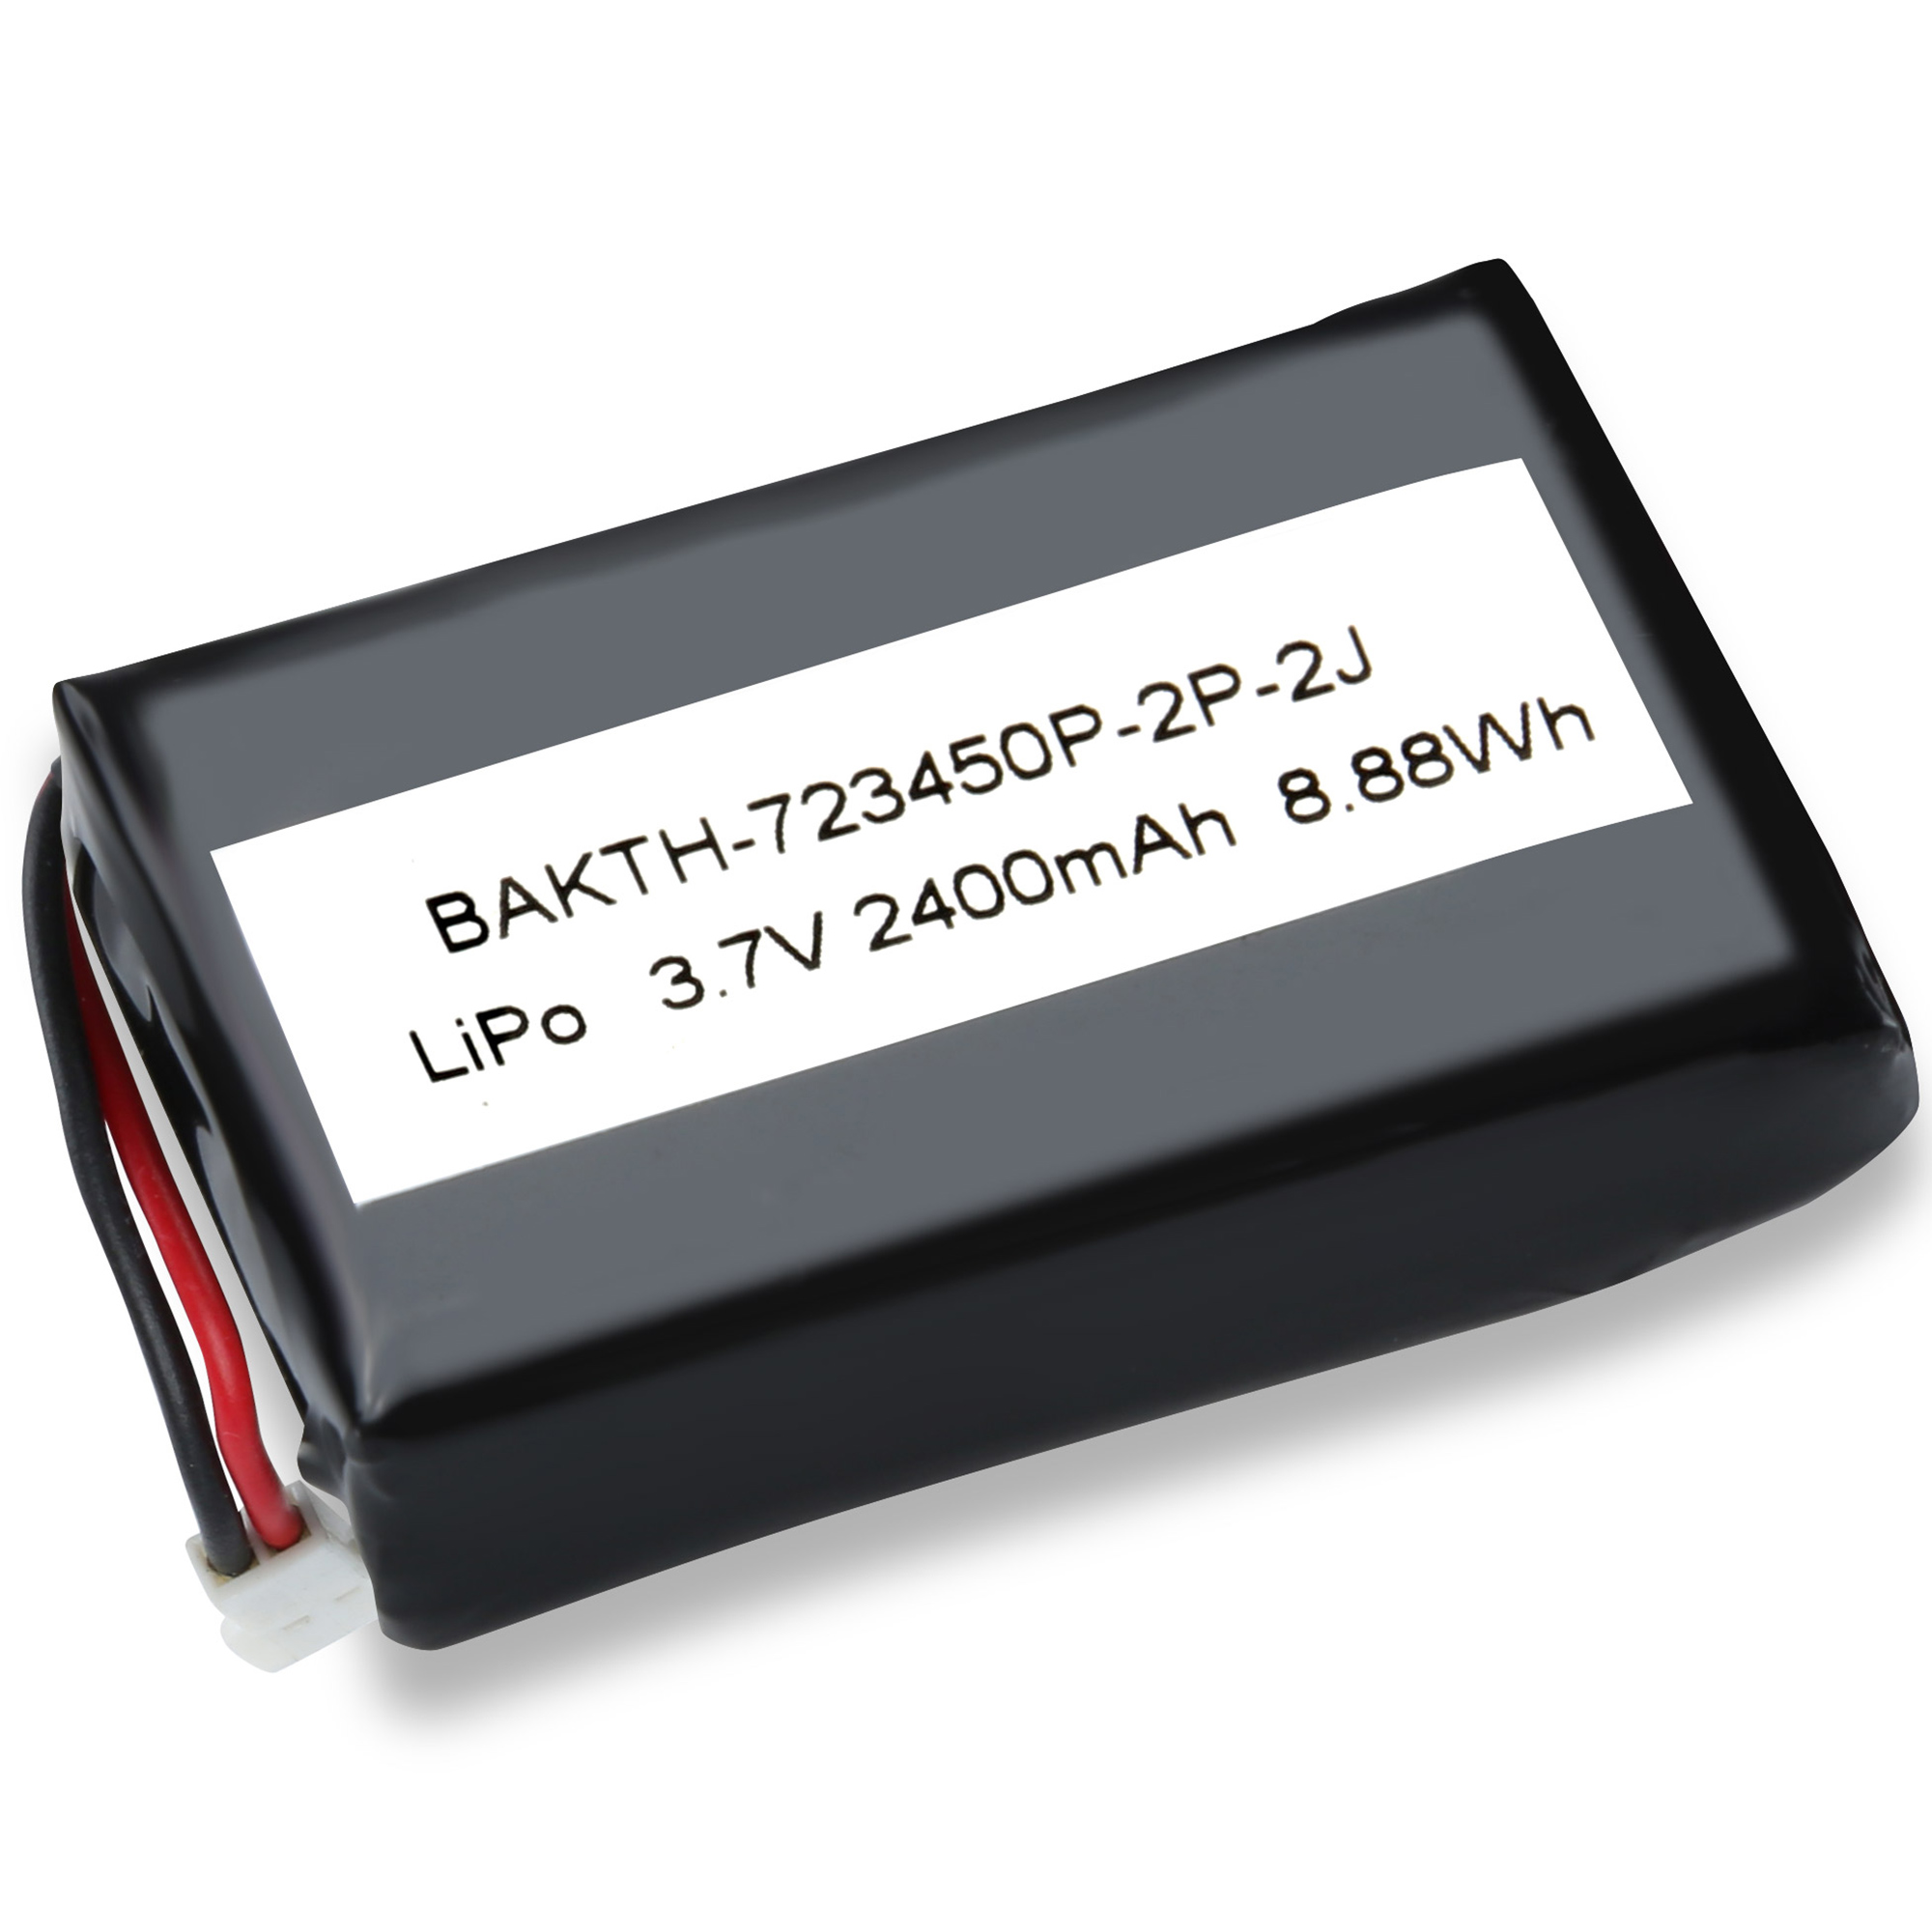 BAKTH-723450P-2P-3J可充电锂聚合物电池3.7V 2400mAh电池组